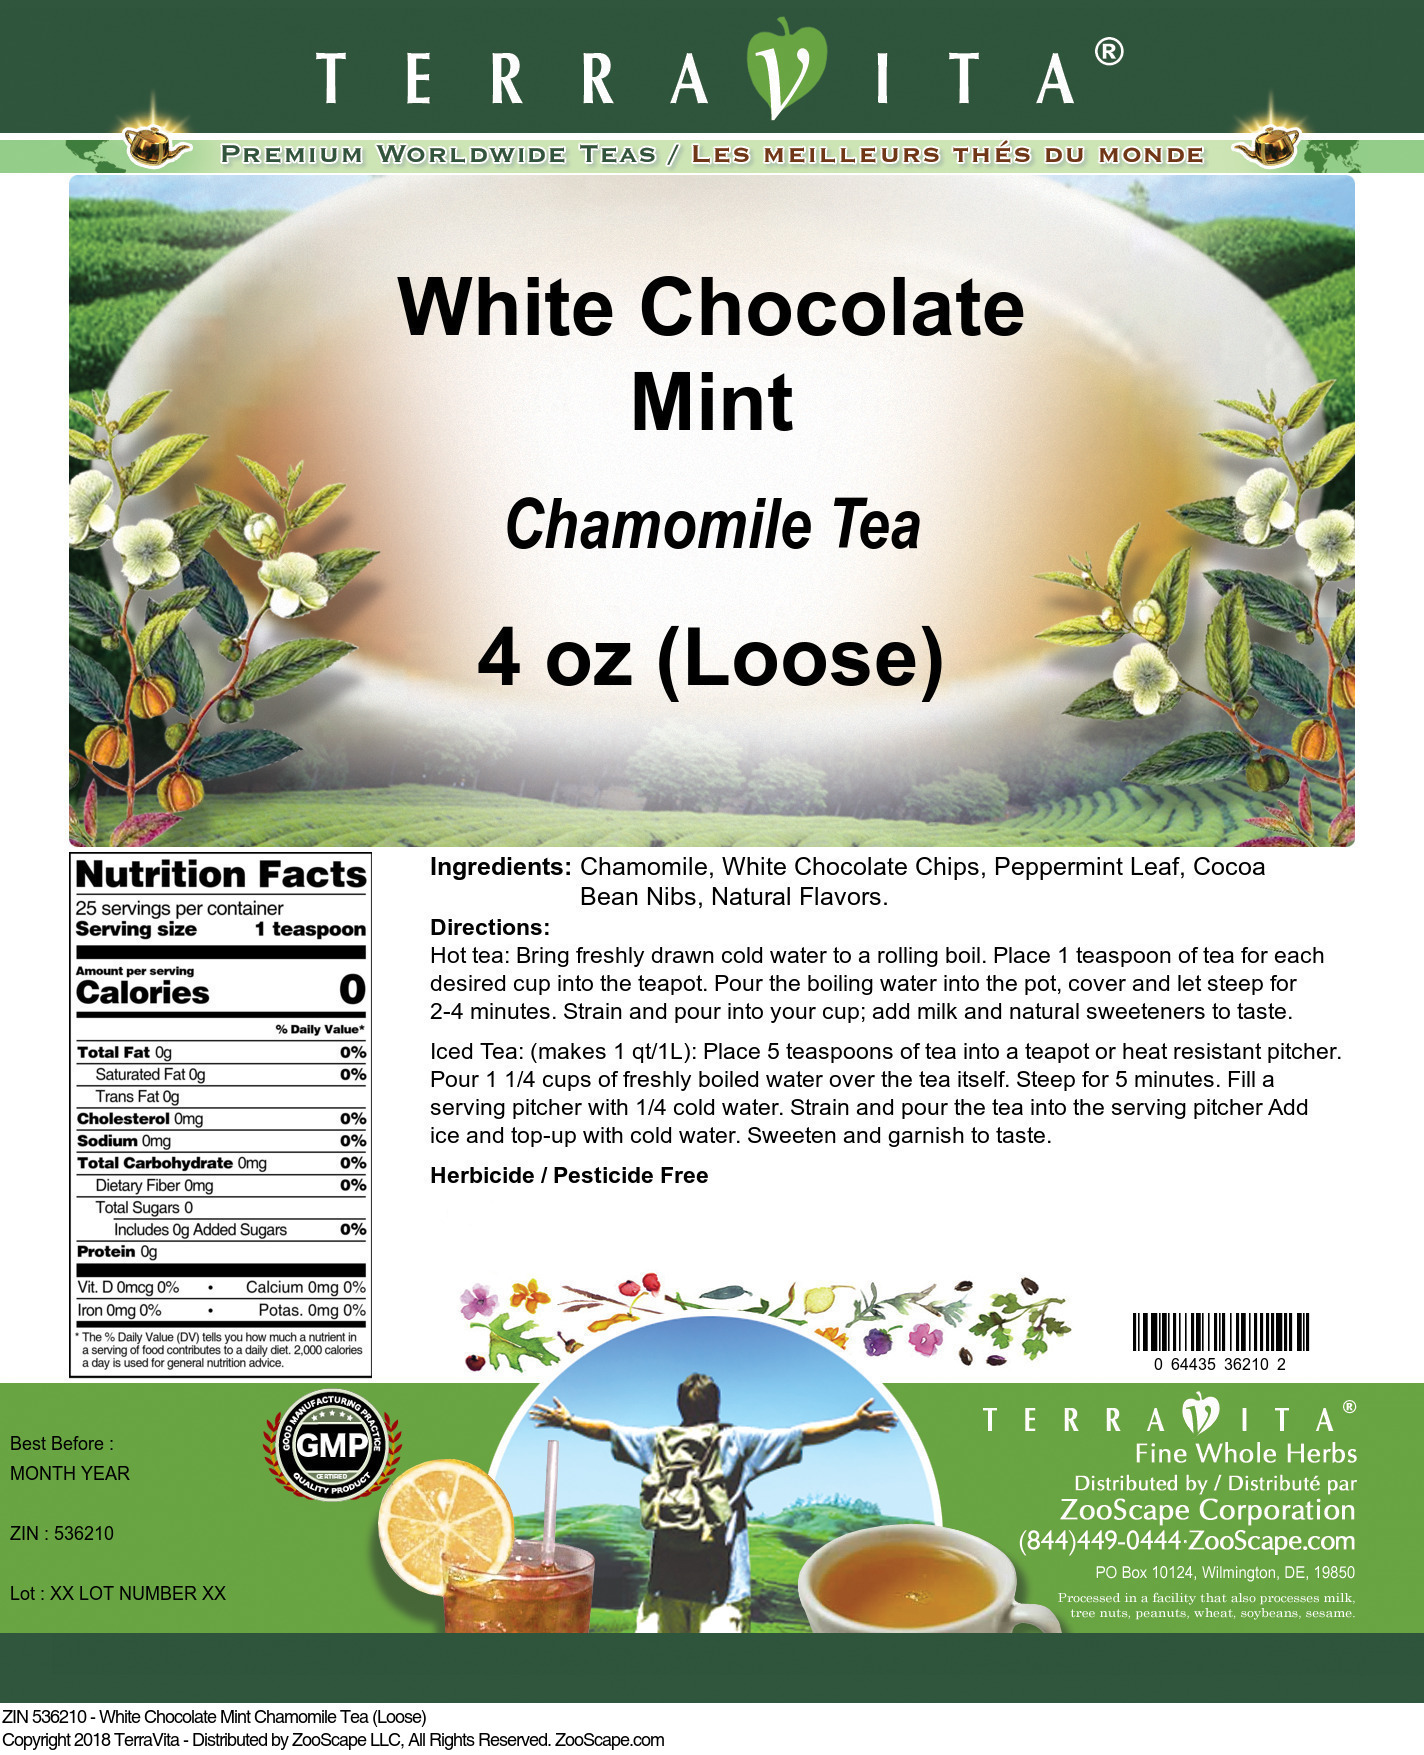 White Chocolate Mint Chamomile Tea (Loose) - Label